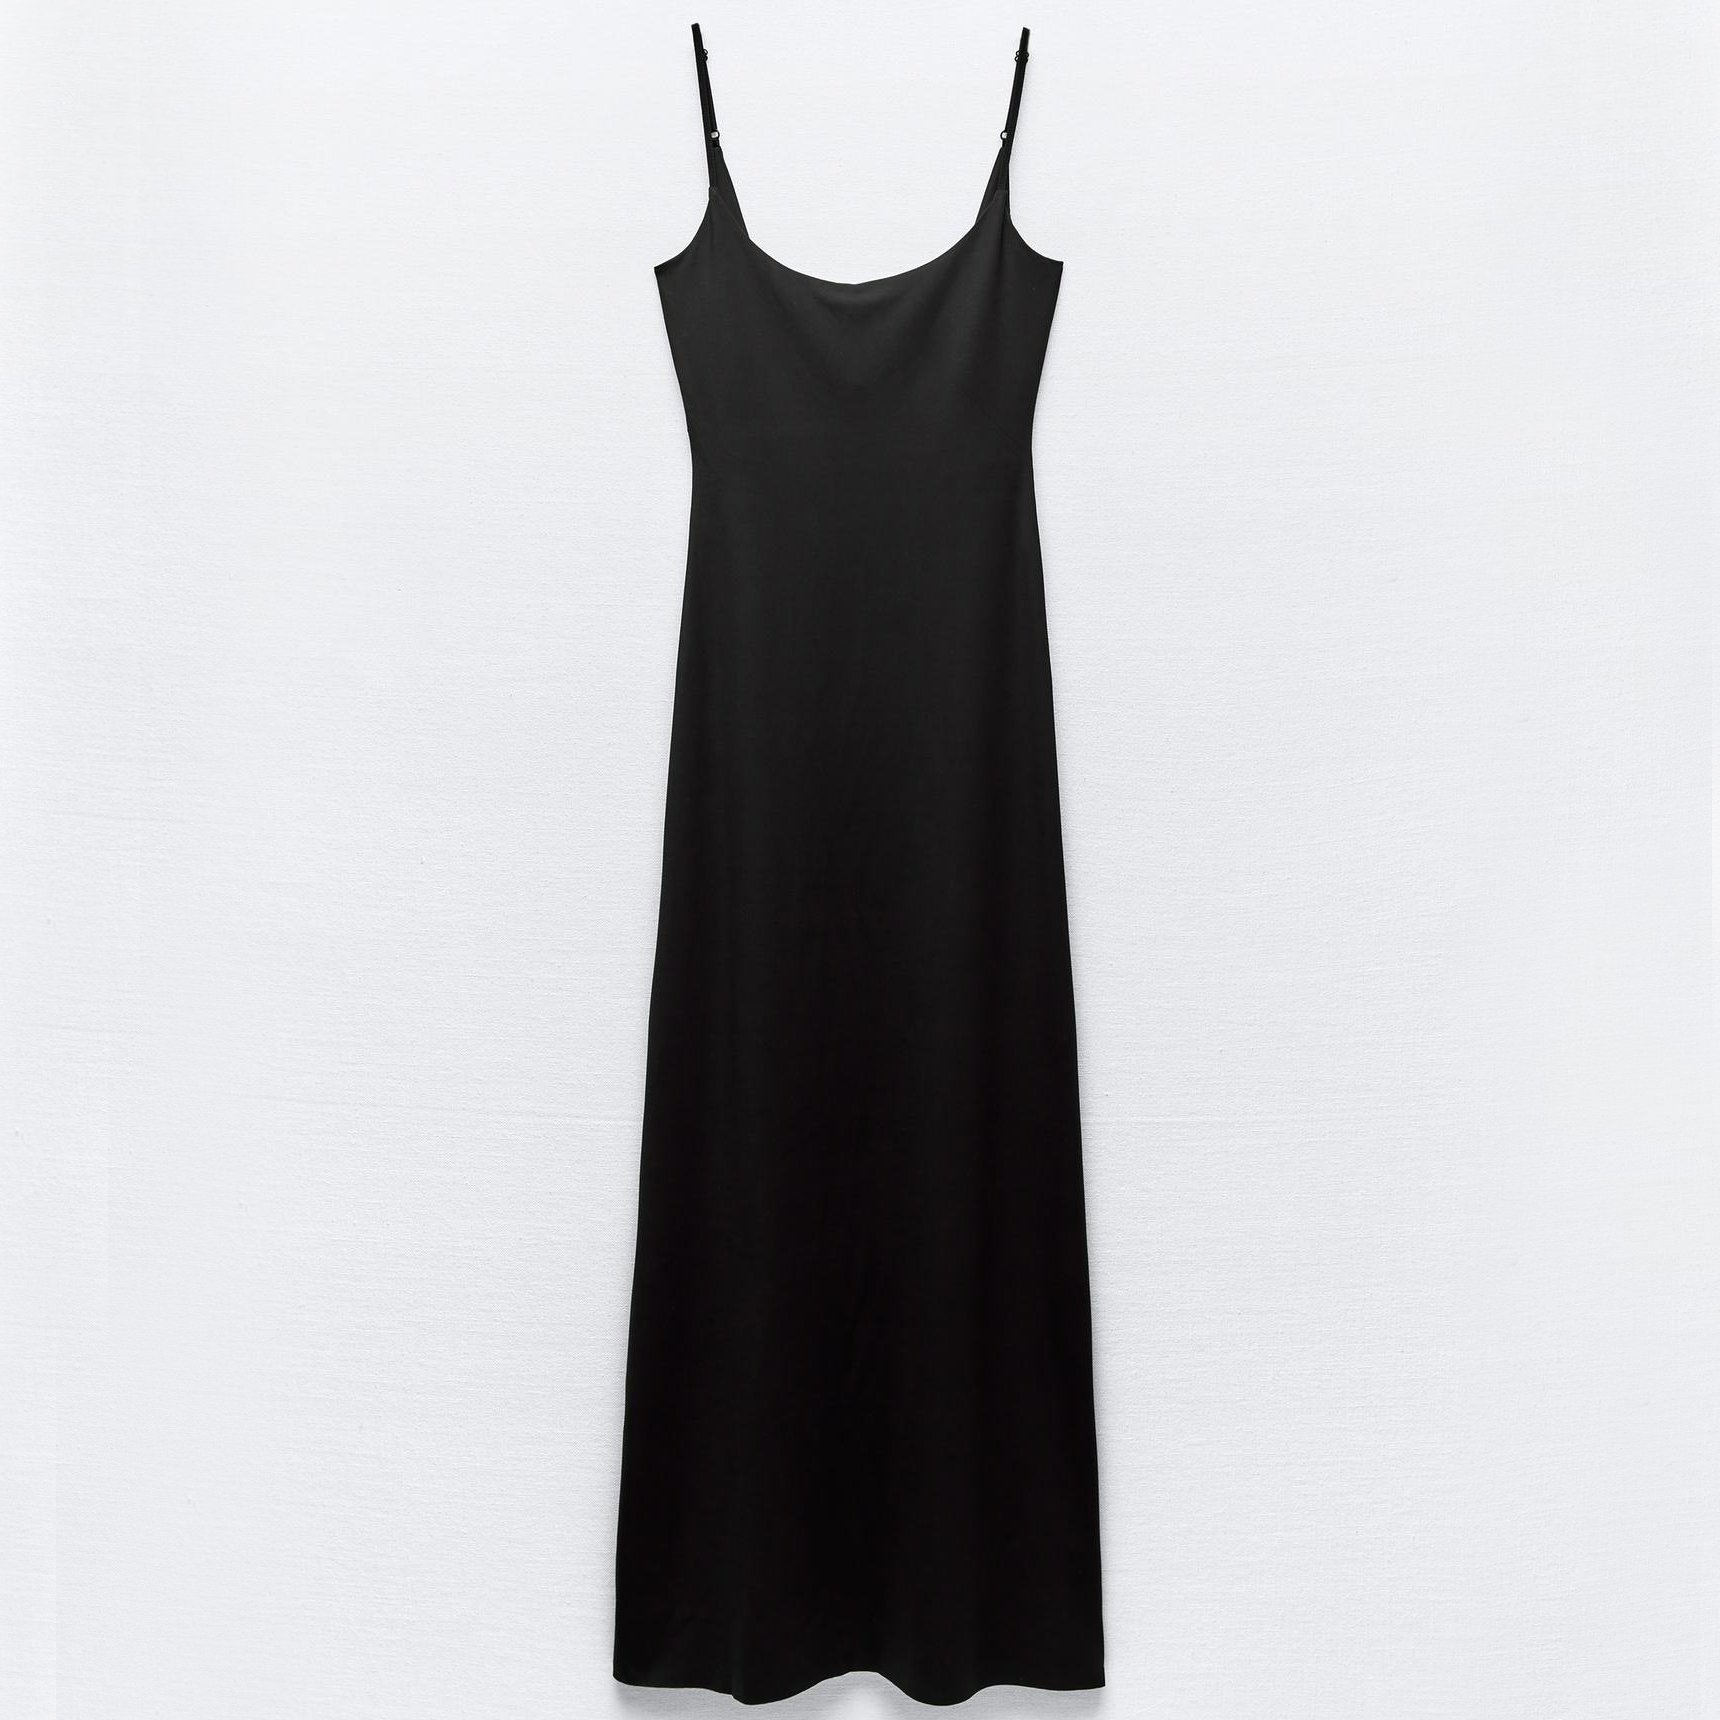 Платье Zara Polyamide Blend Bodycon, черный платье zara polyamide with rhinestones черный